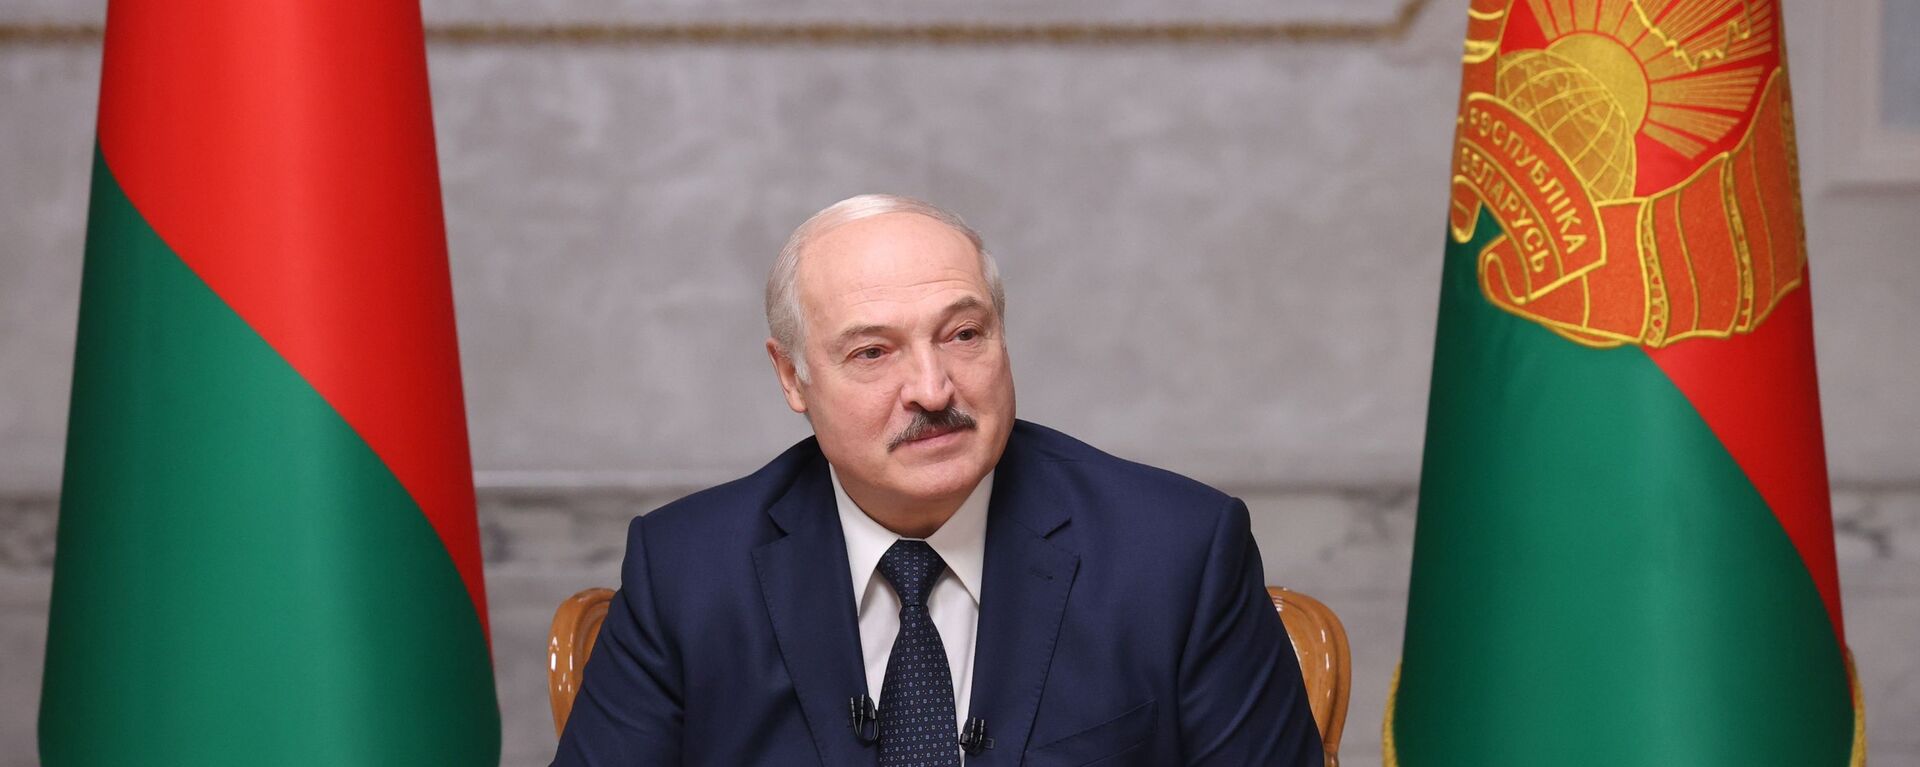 Президент Белоруссии А. Лукашенко - Sputnik Молдова, 1920, 20.09.2021